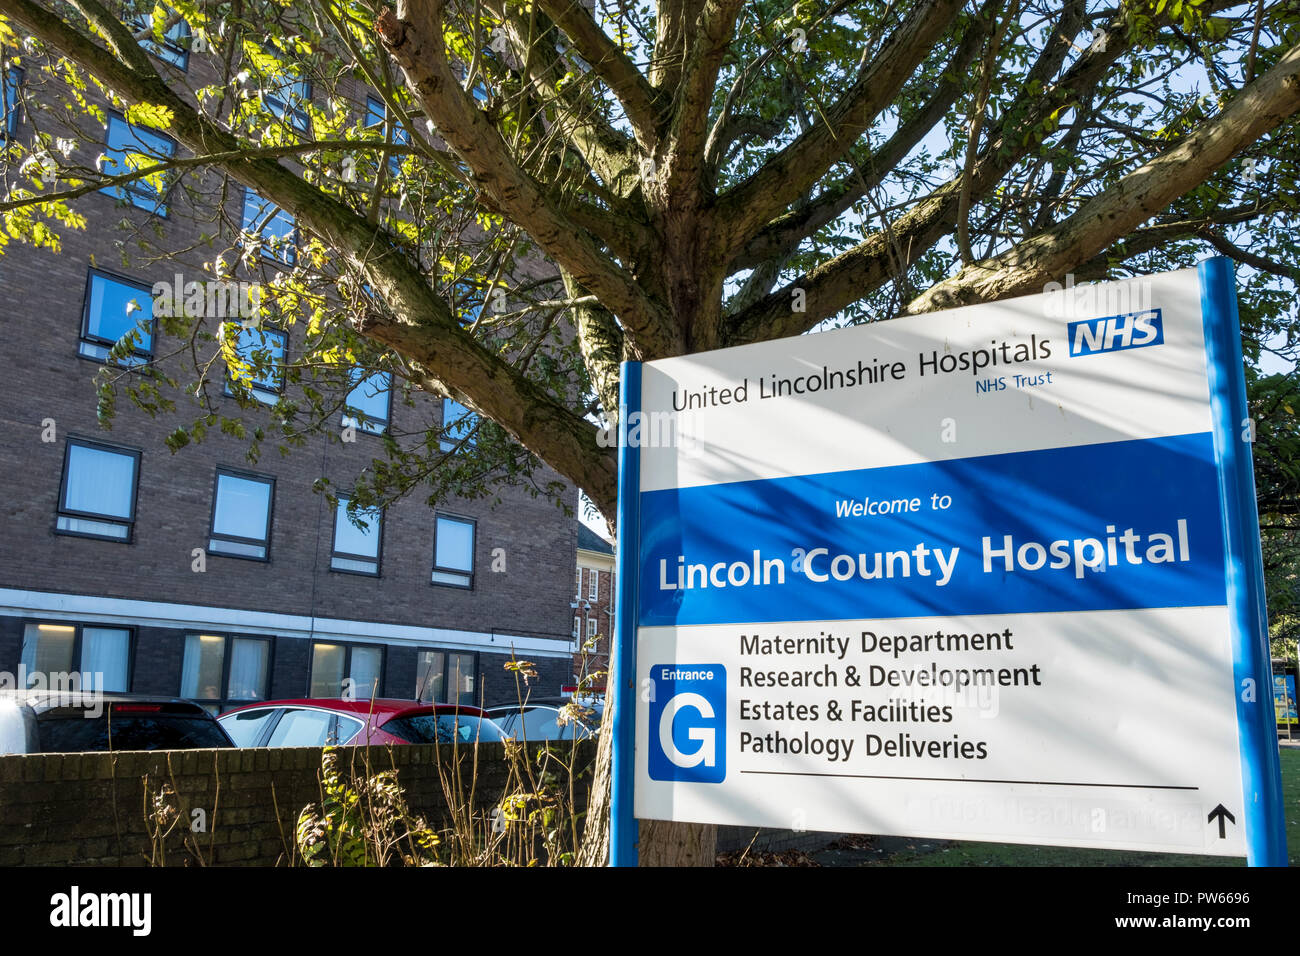 Lincoln County Hospital, Lincoln, England, UK Stock Photo